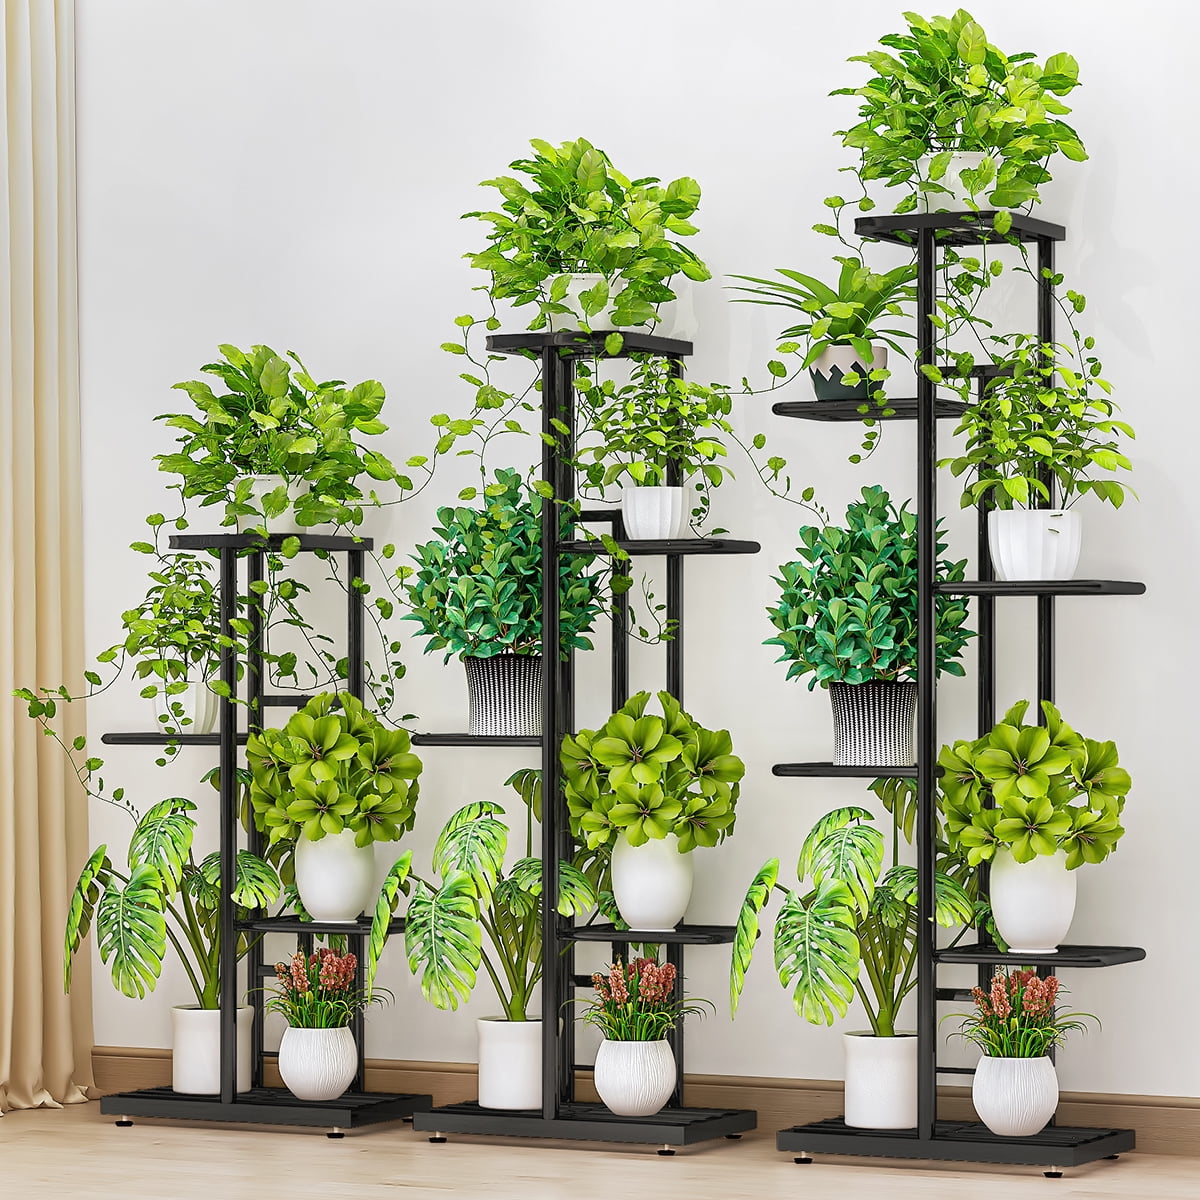 5 Tier Plant Stand Planter Flower 6-Pot Rack Shelf Garden Outdoor Metal Decor US